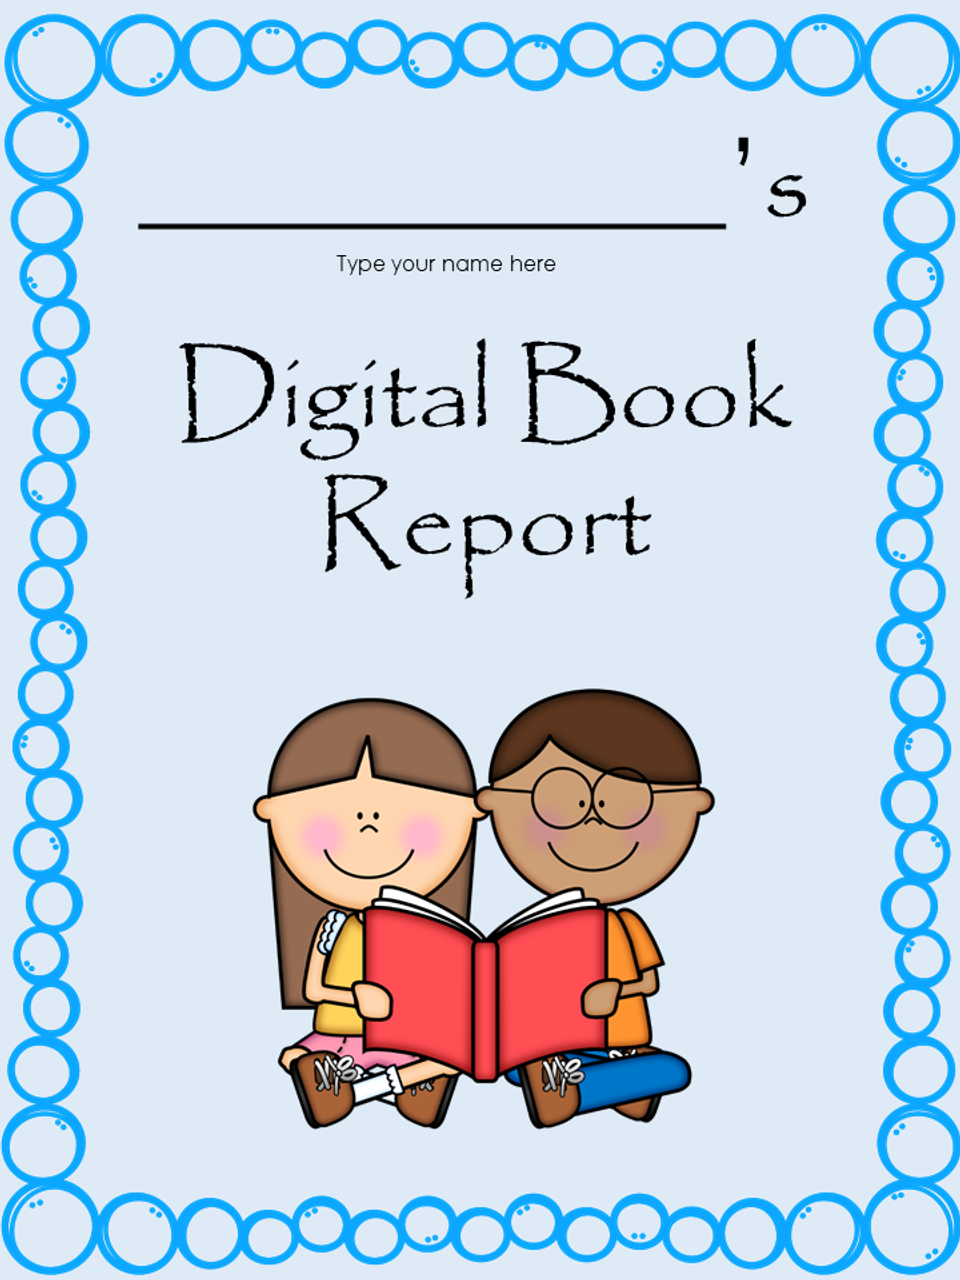 Interactive Digital Book Report in Google Slides